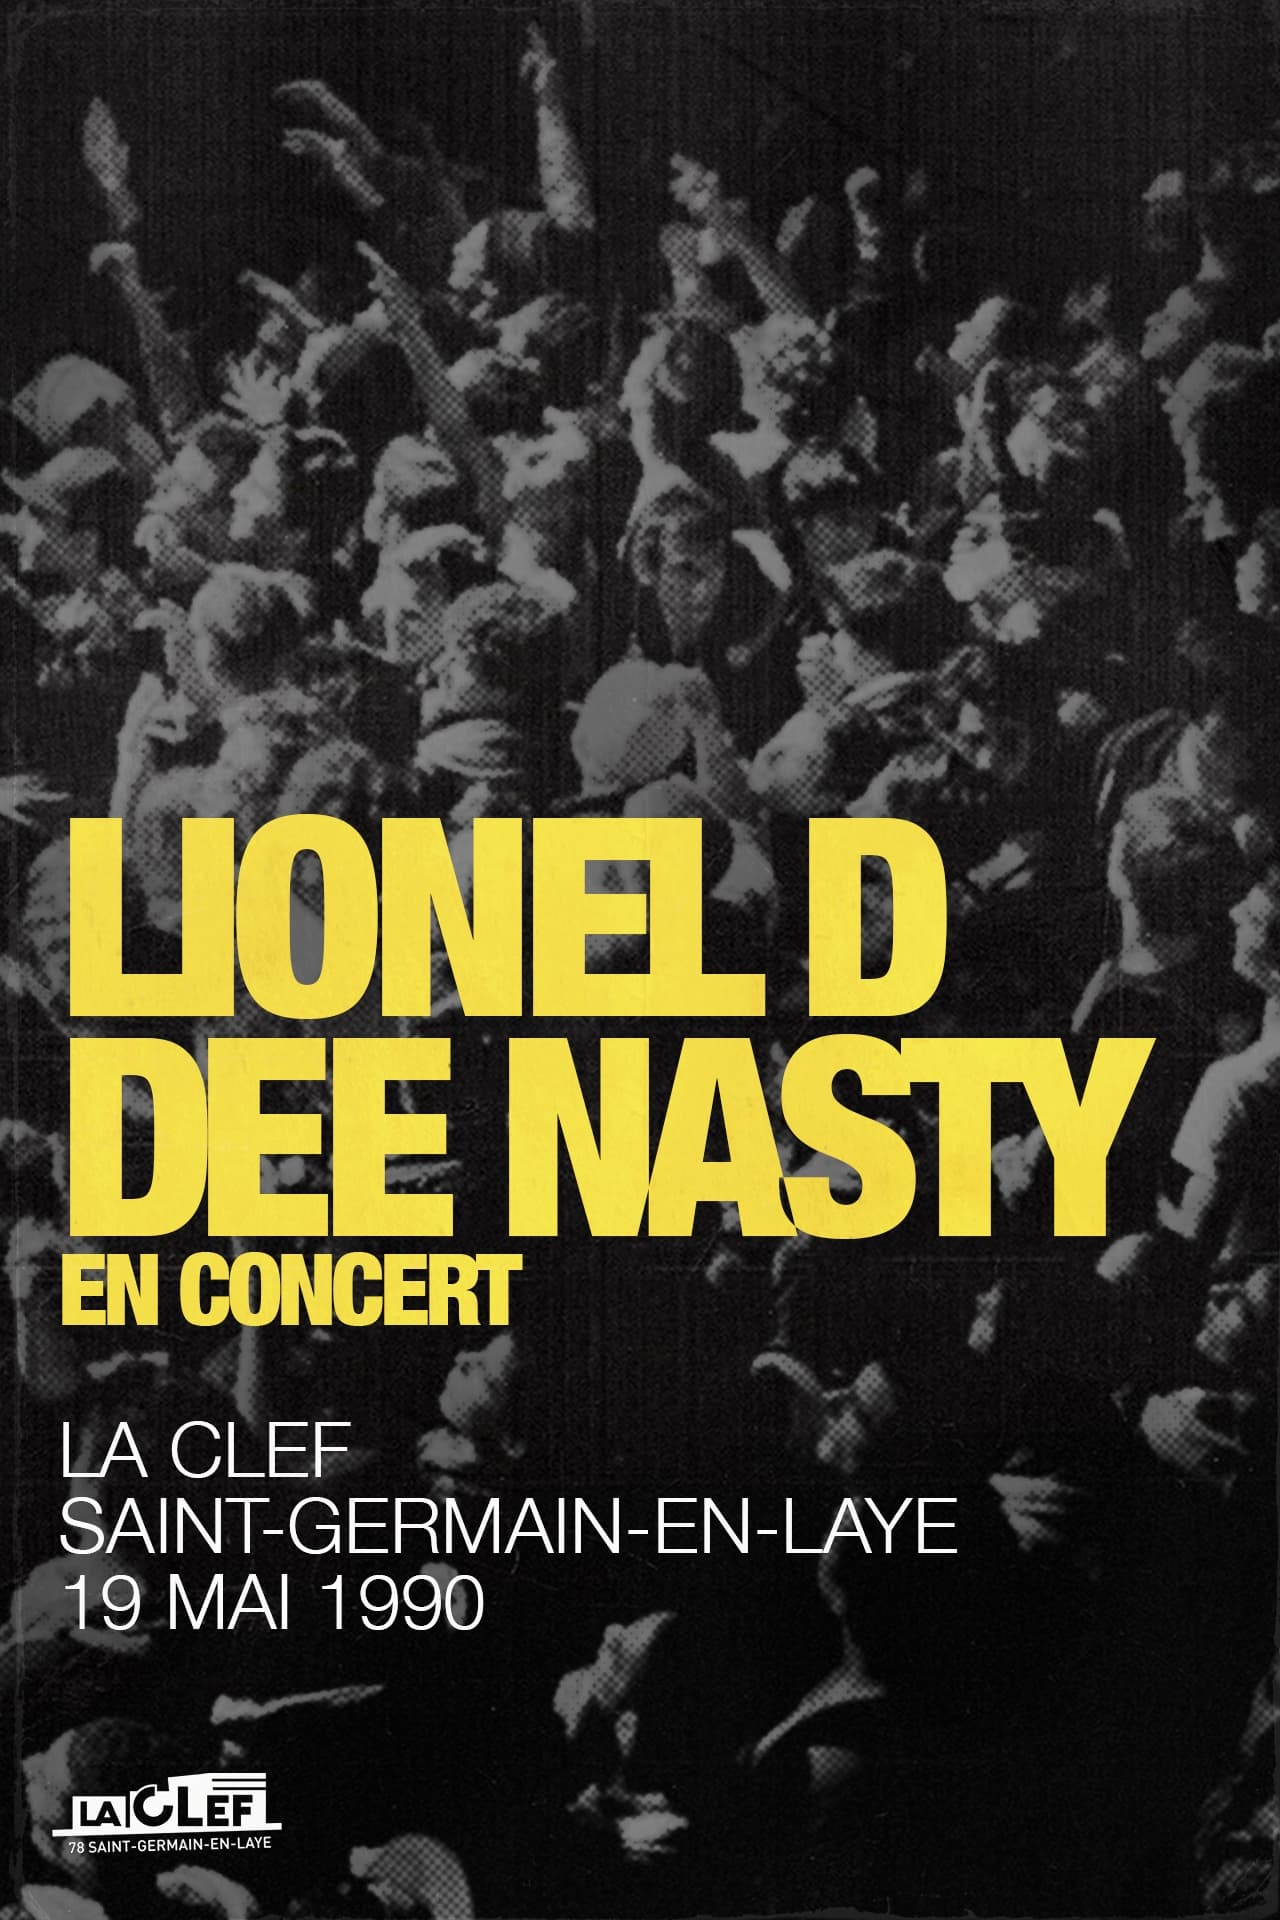 Lionel D & Dee Nasty Live 19 mai 1990